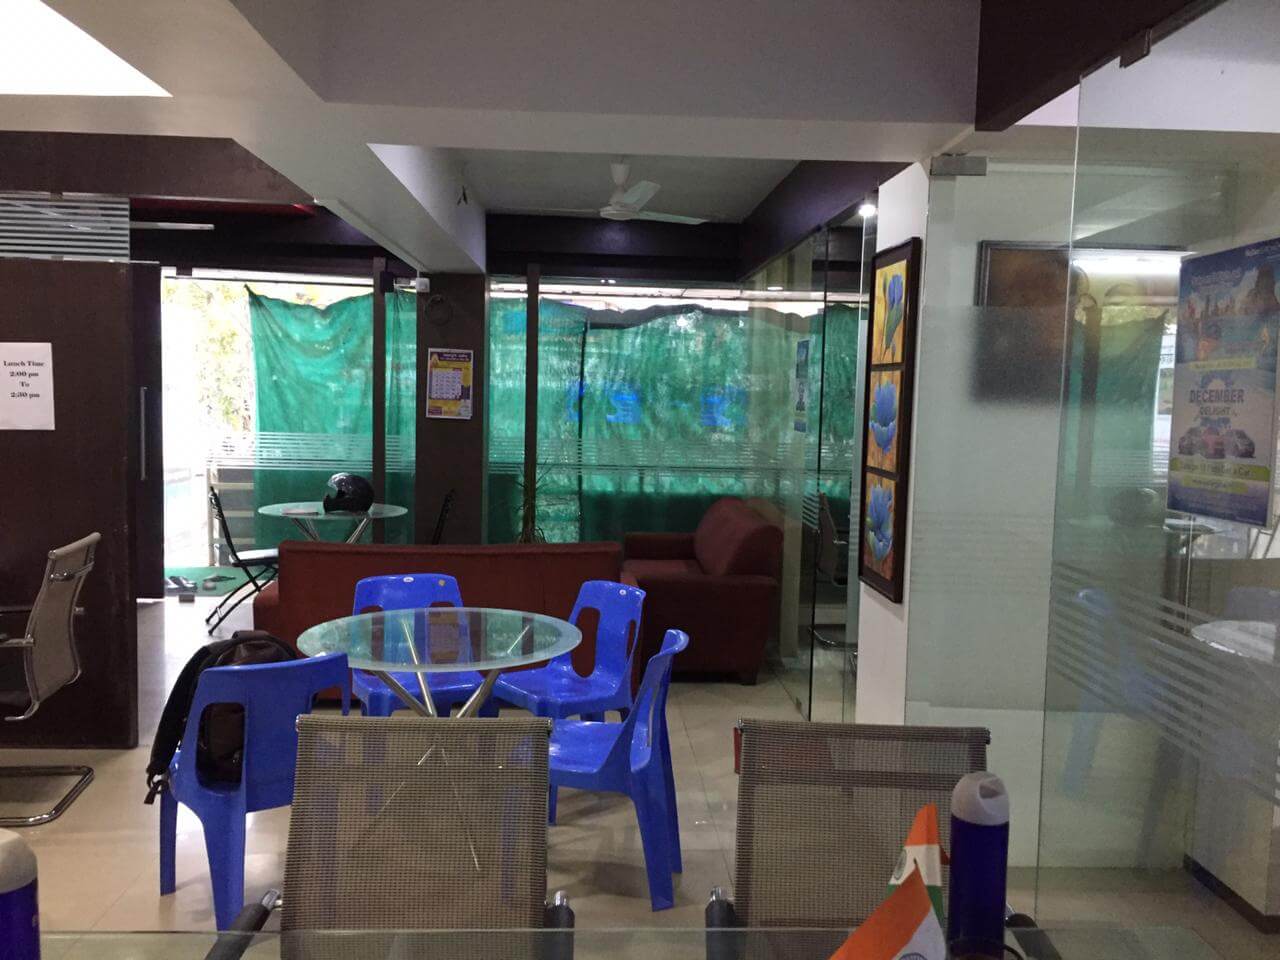 Office Space for Rent 1100 Sq. Feet at Nagpur
, Narendra Nagar